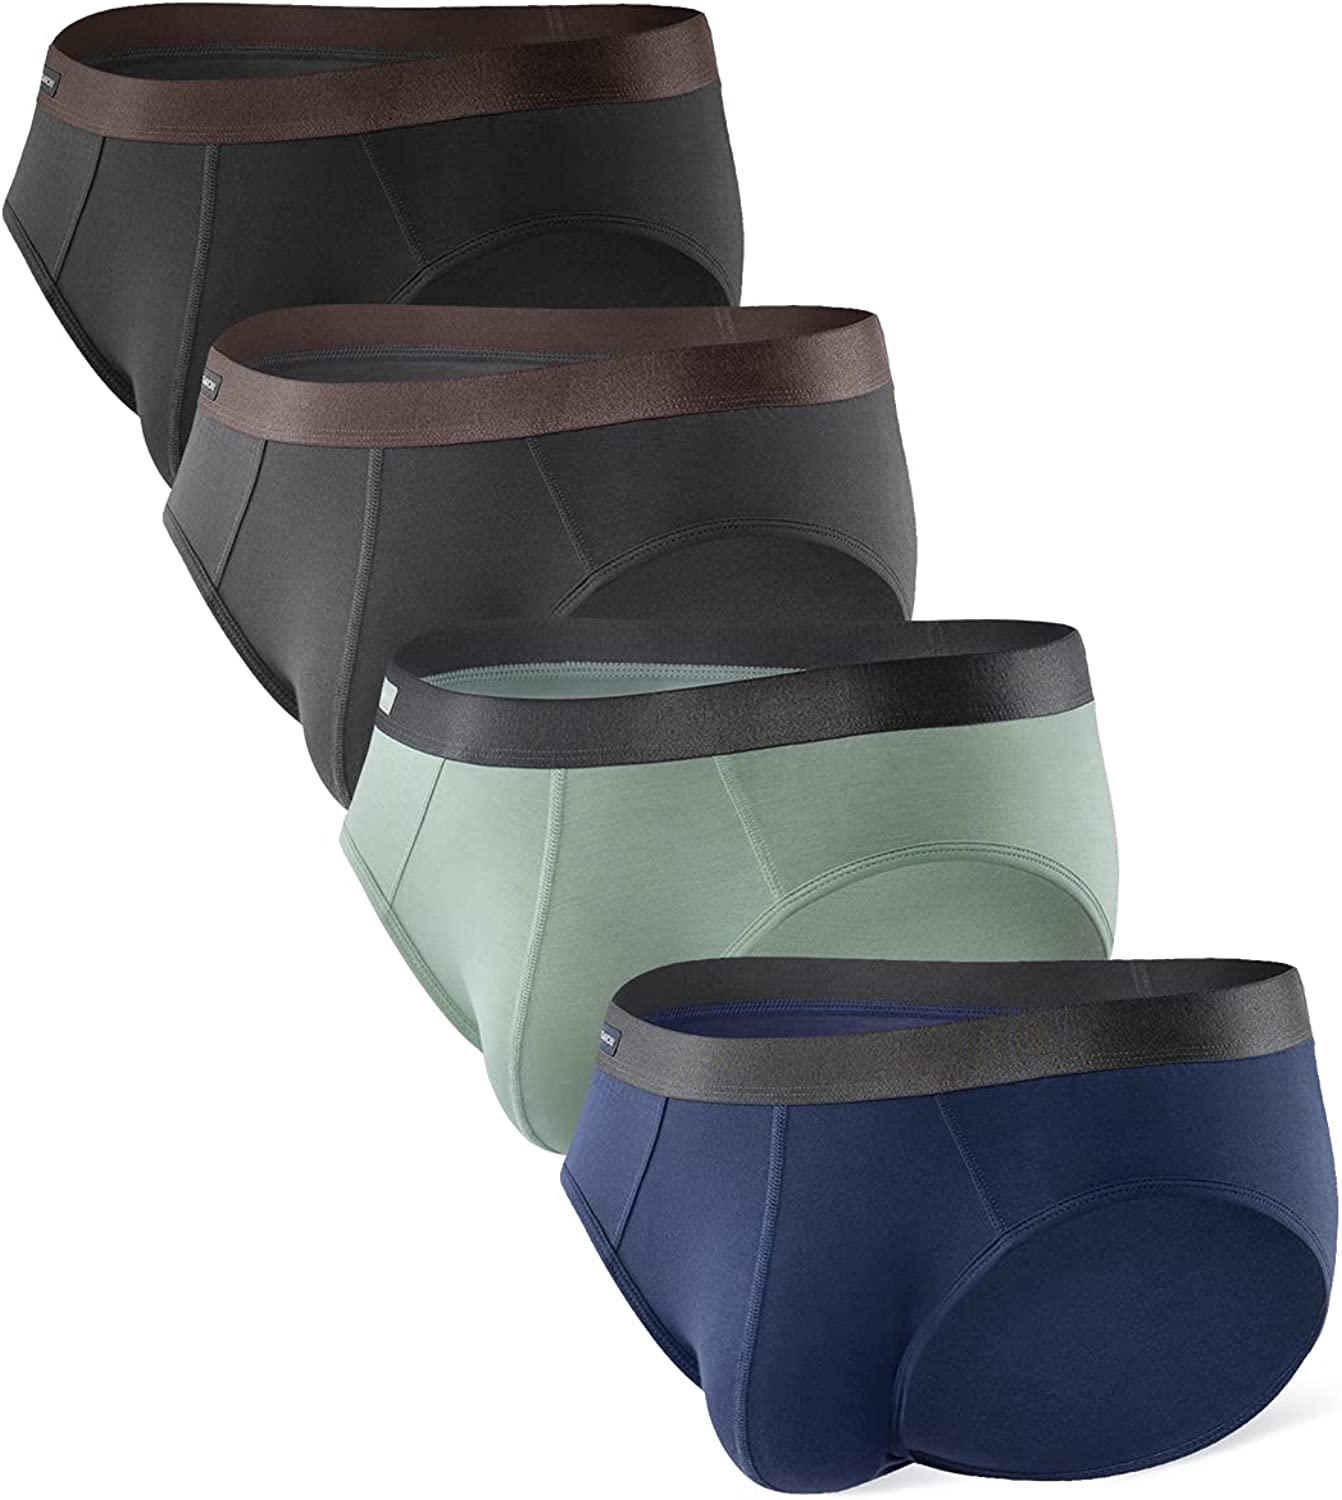 DAVID ARCHY Men's Underwear Bamboo Rayon Breathable Super